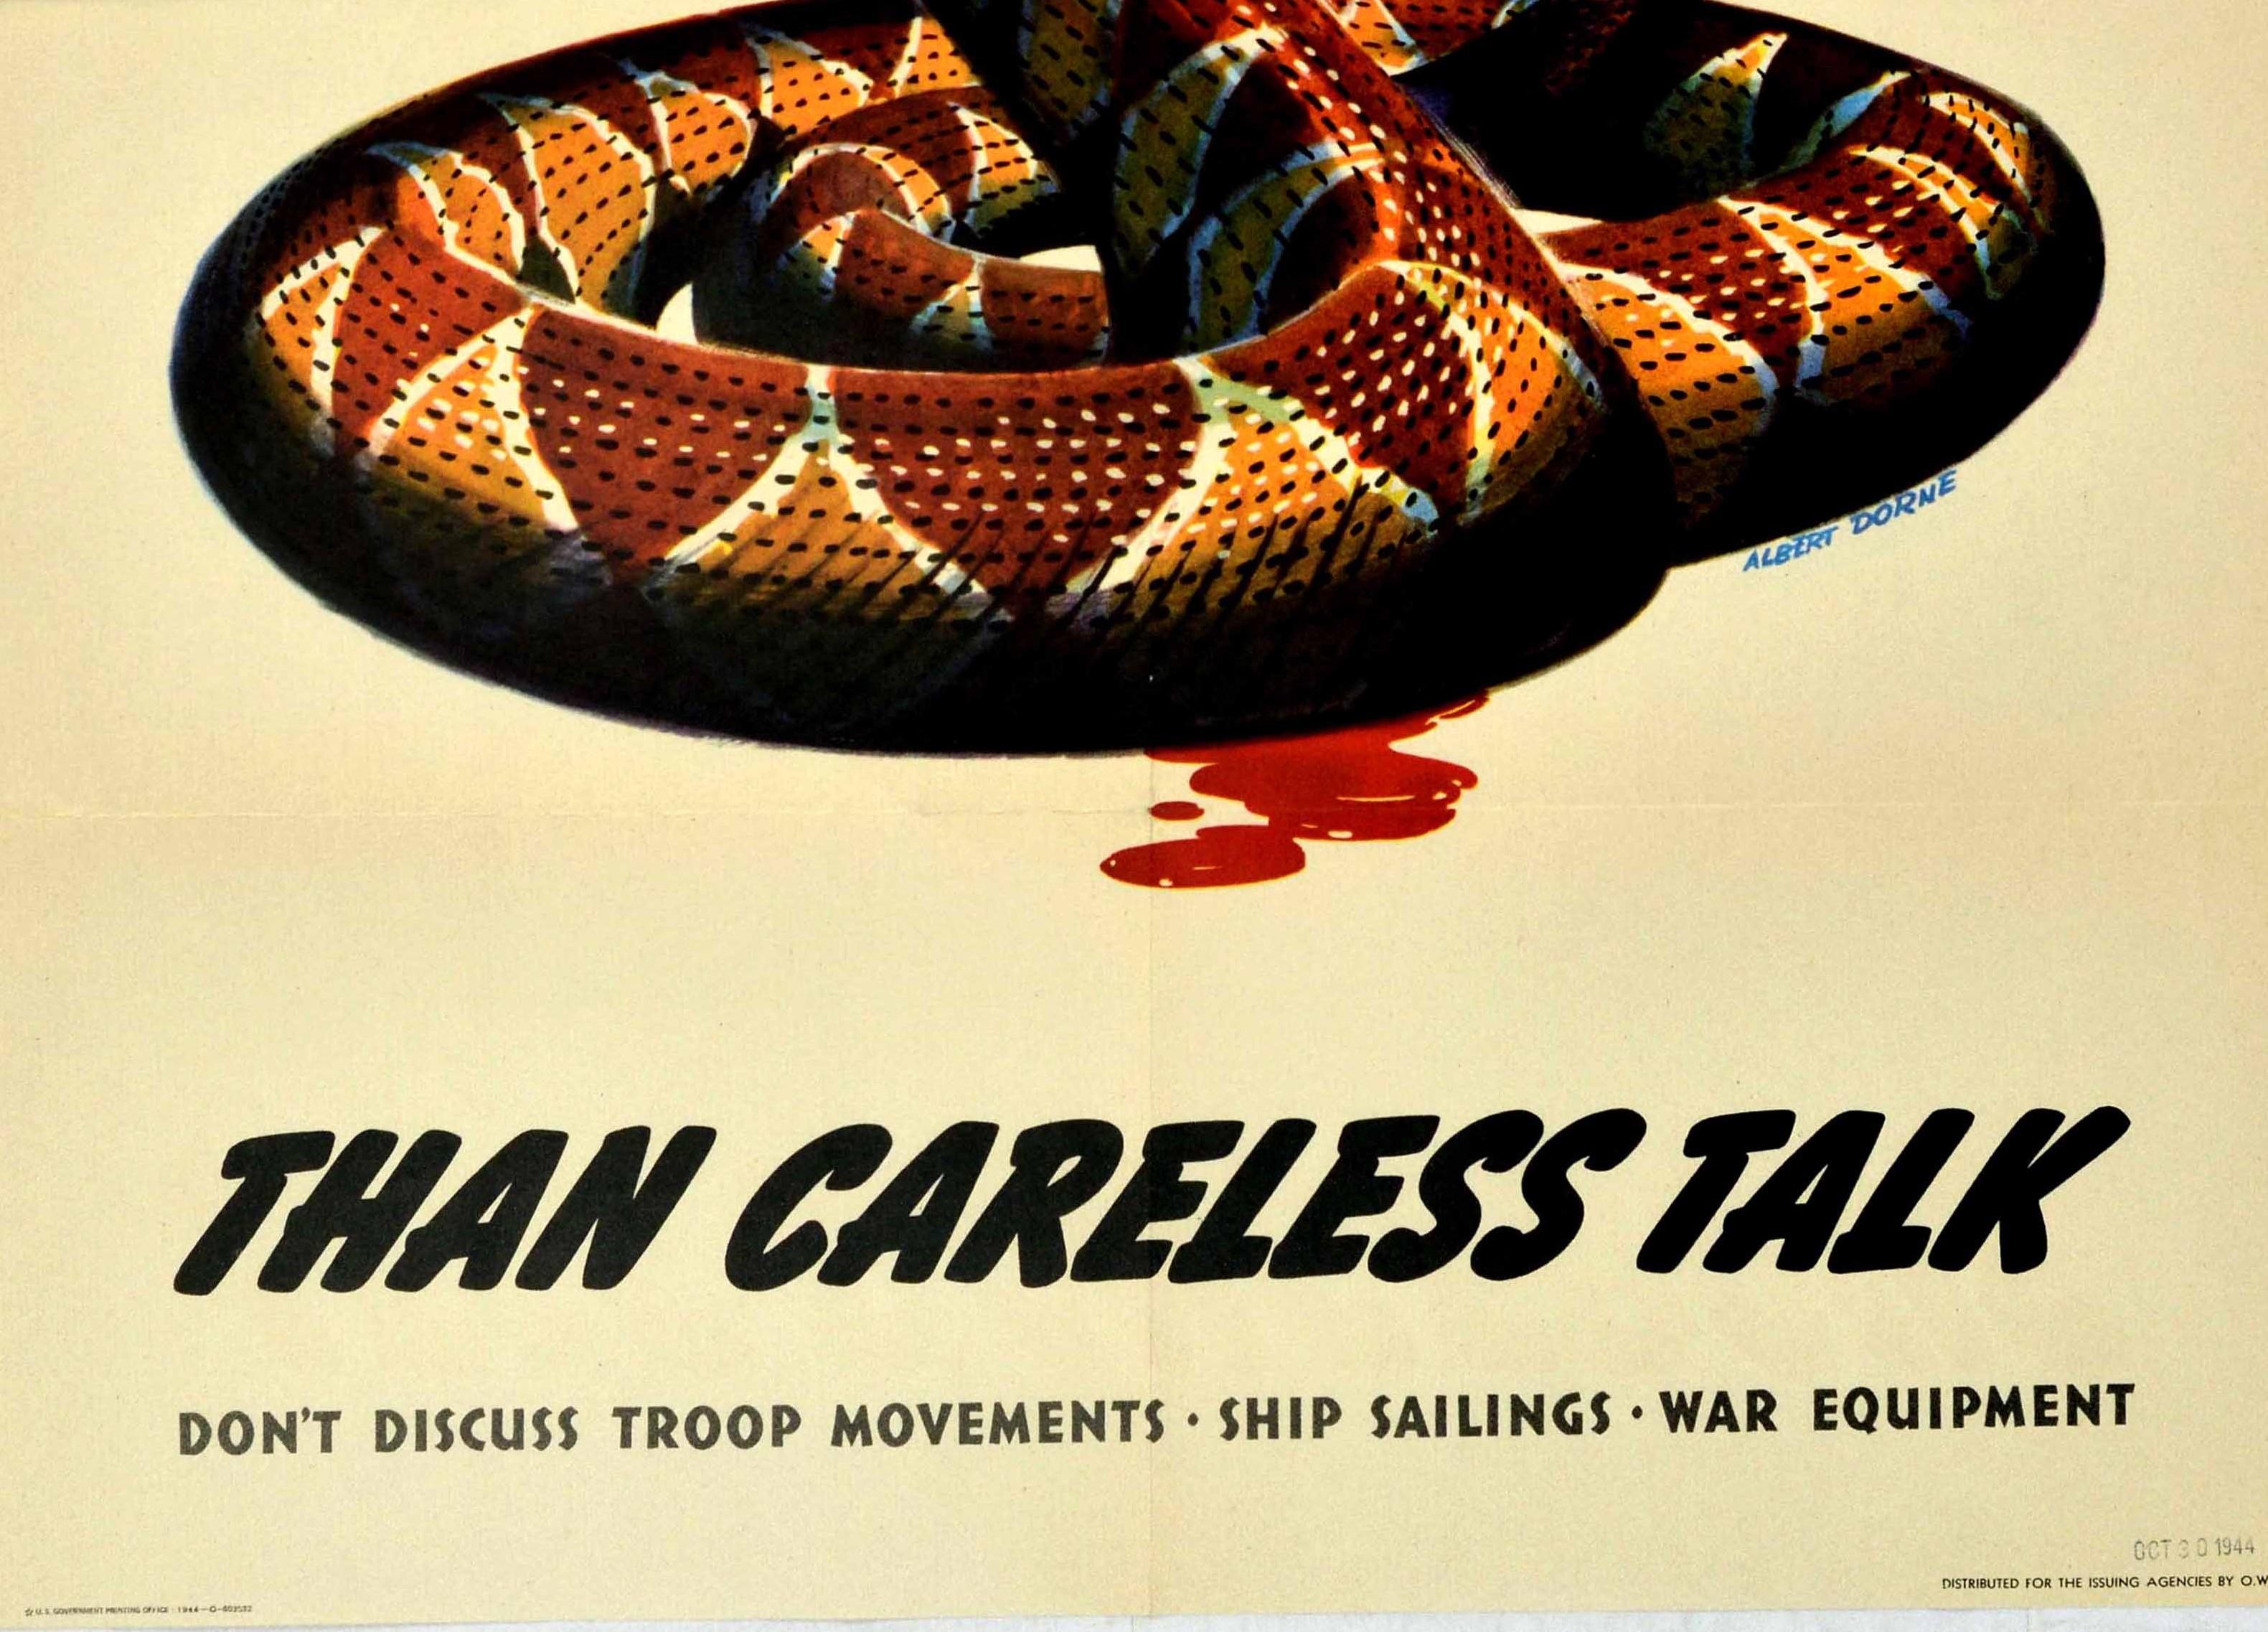 than careless talk snake